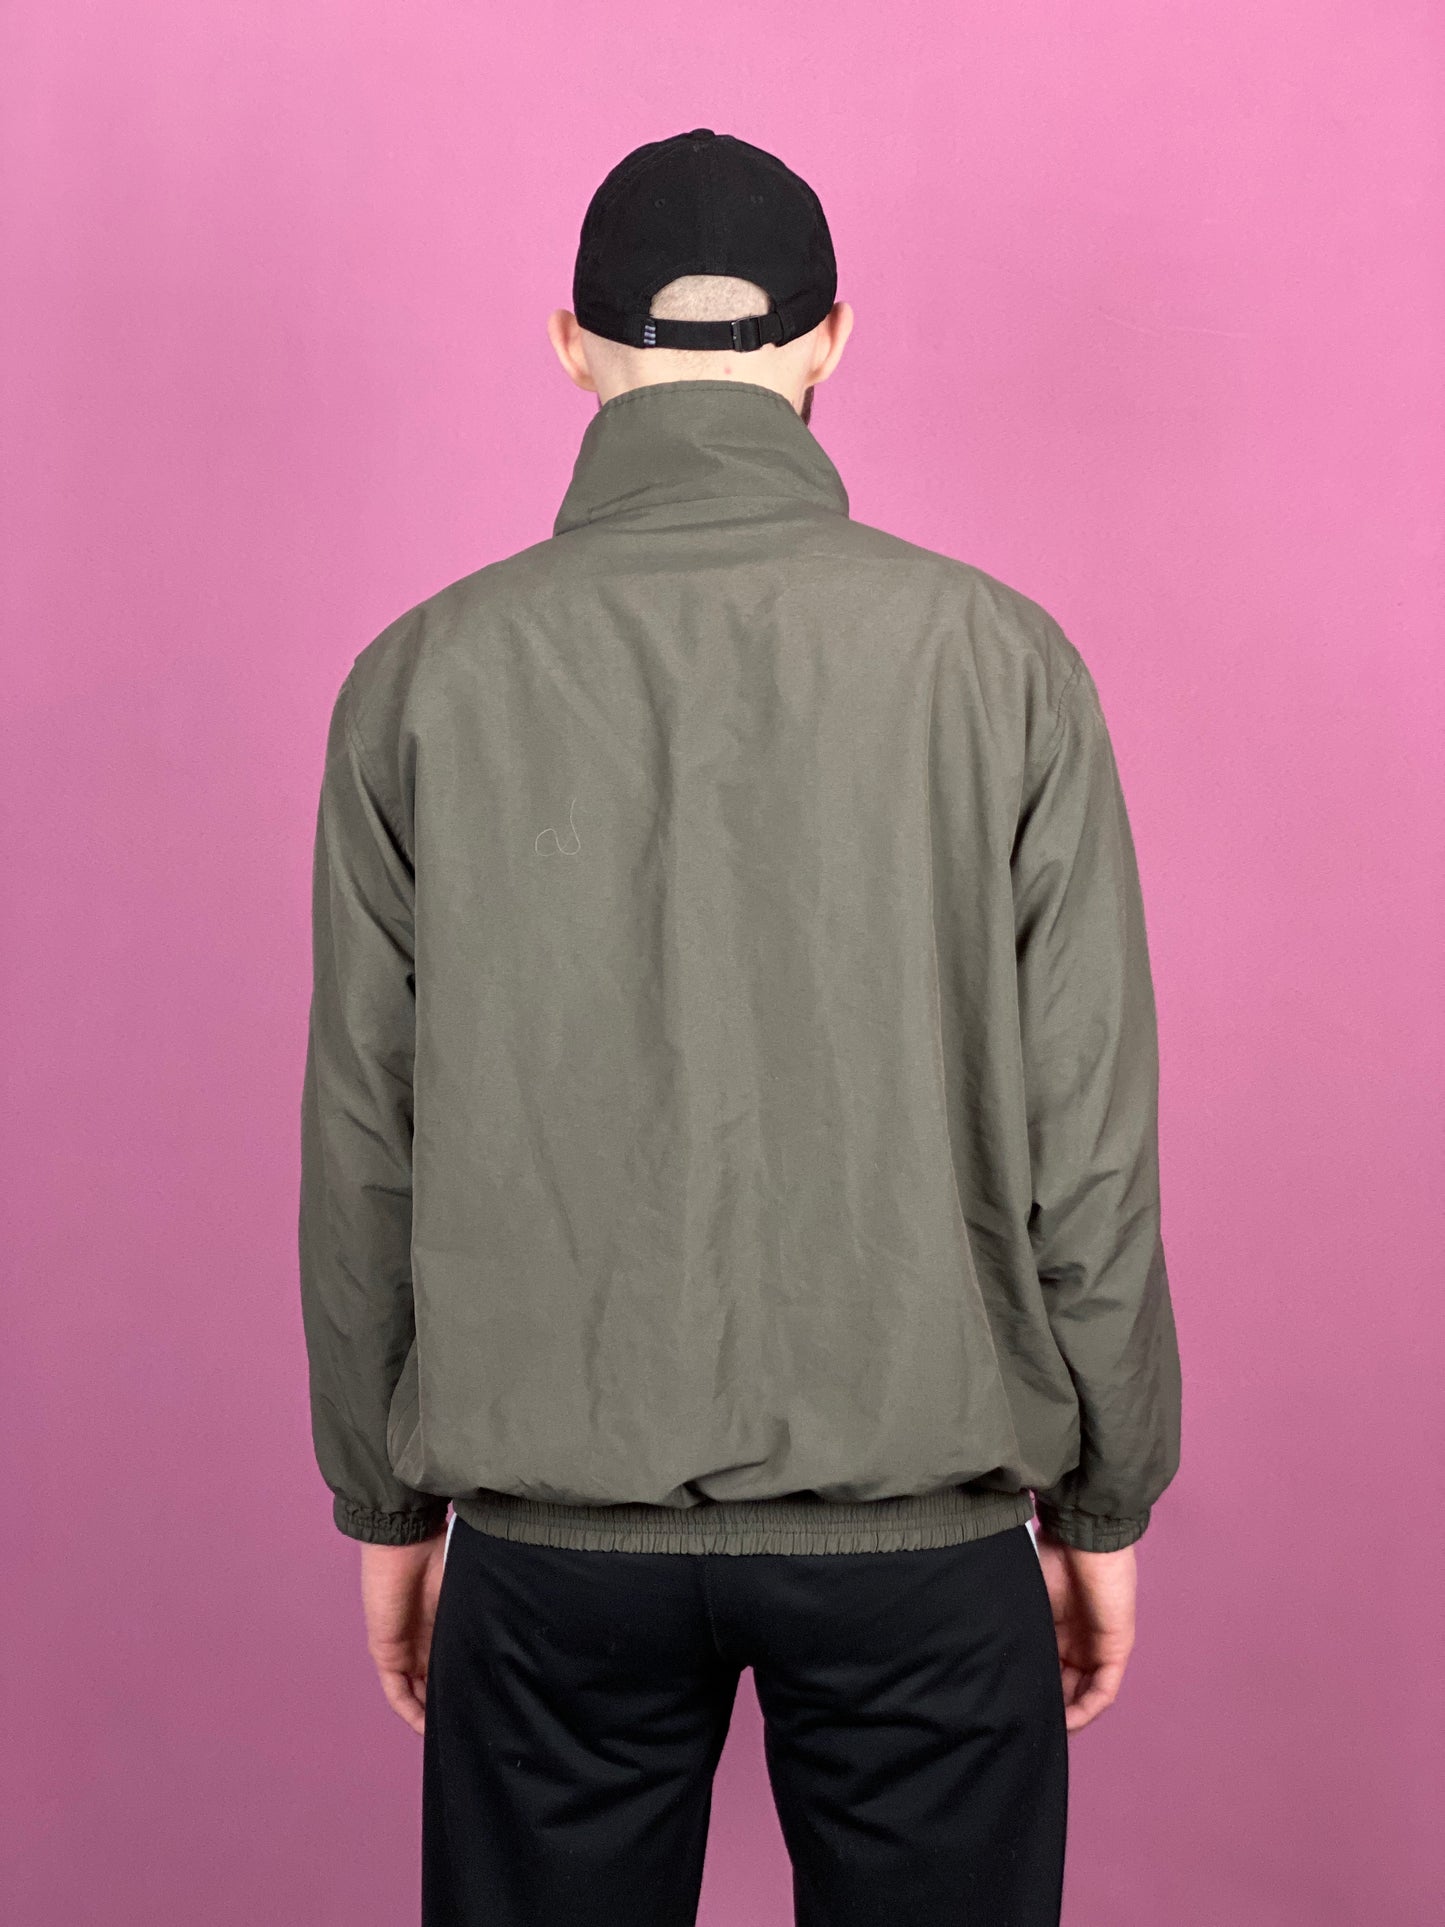 90s Vintage Men's Windbreaker Jacket - Medium Green Cotton Blend